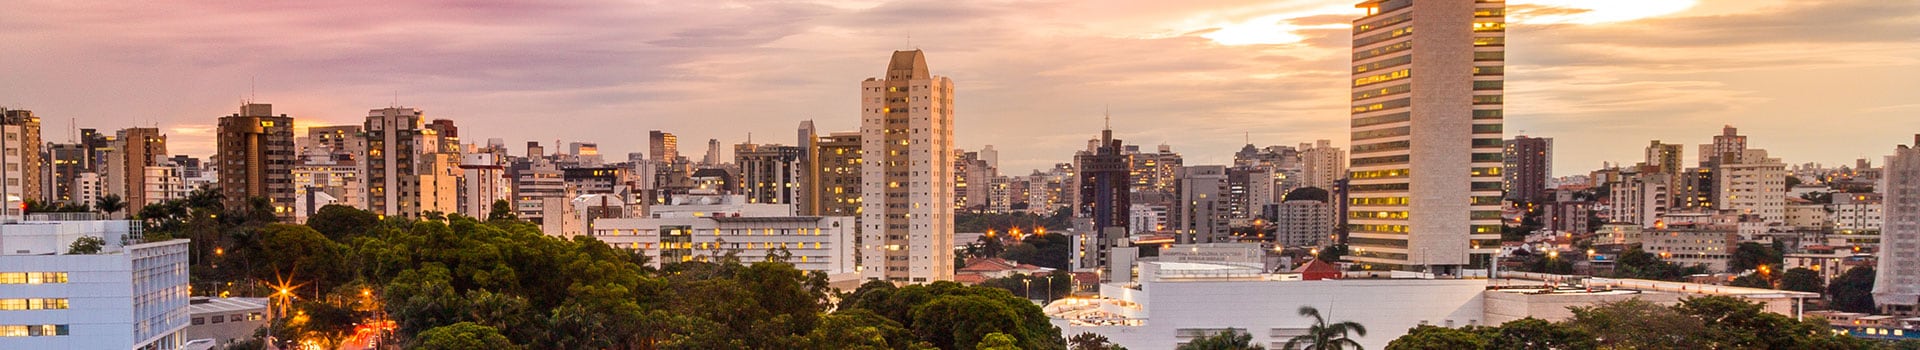 Curitiba - Belo horizonte